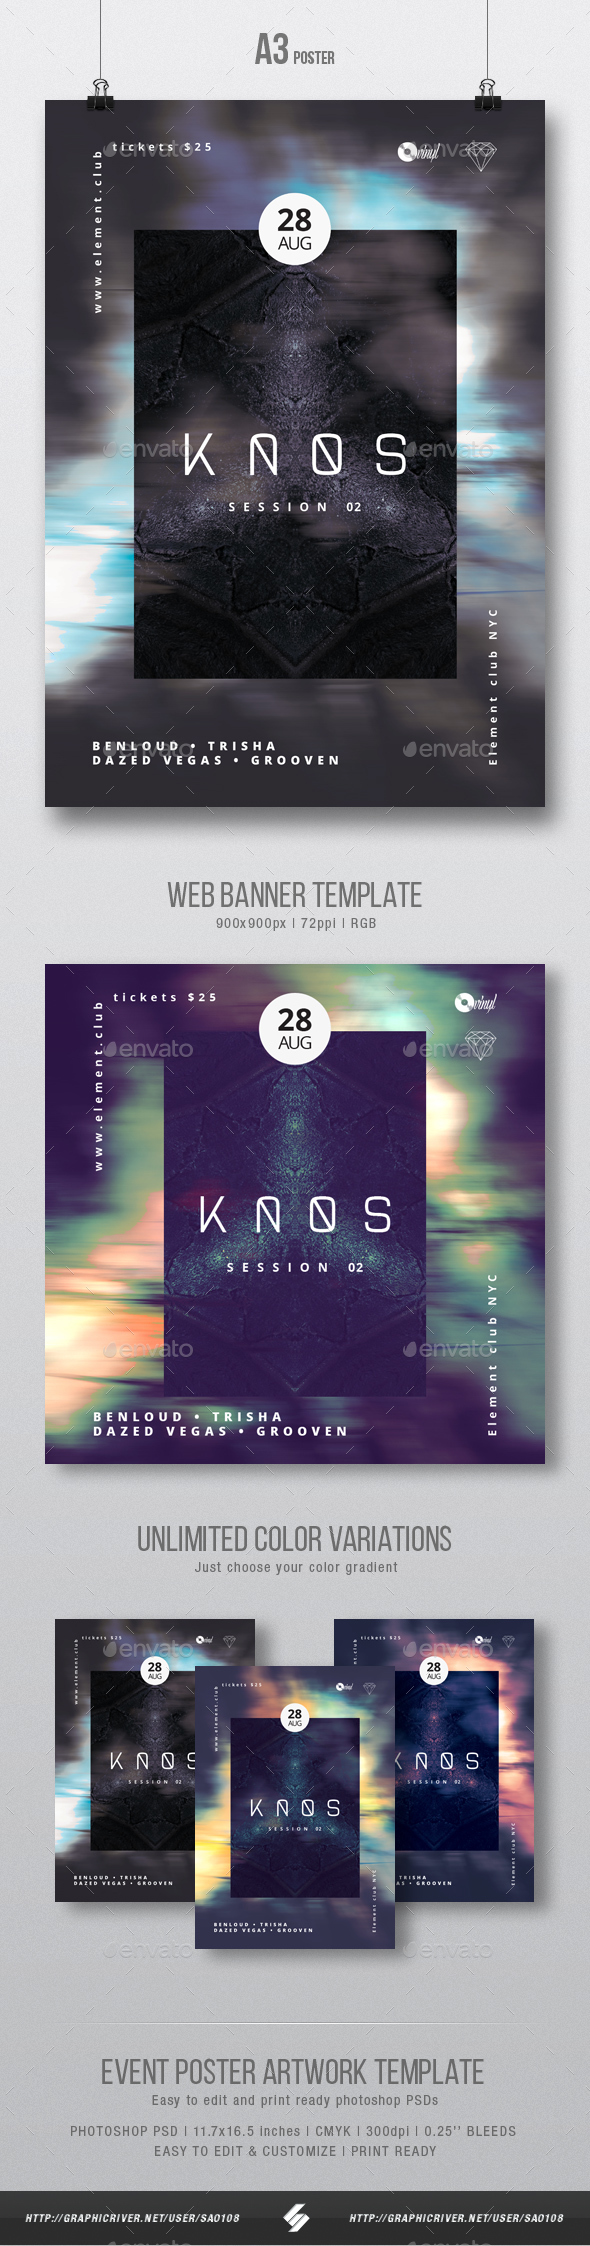 kaos02 poster template preview